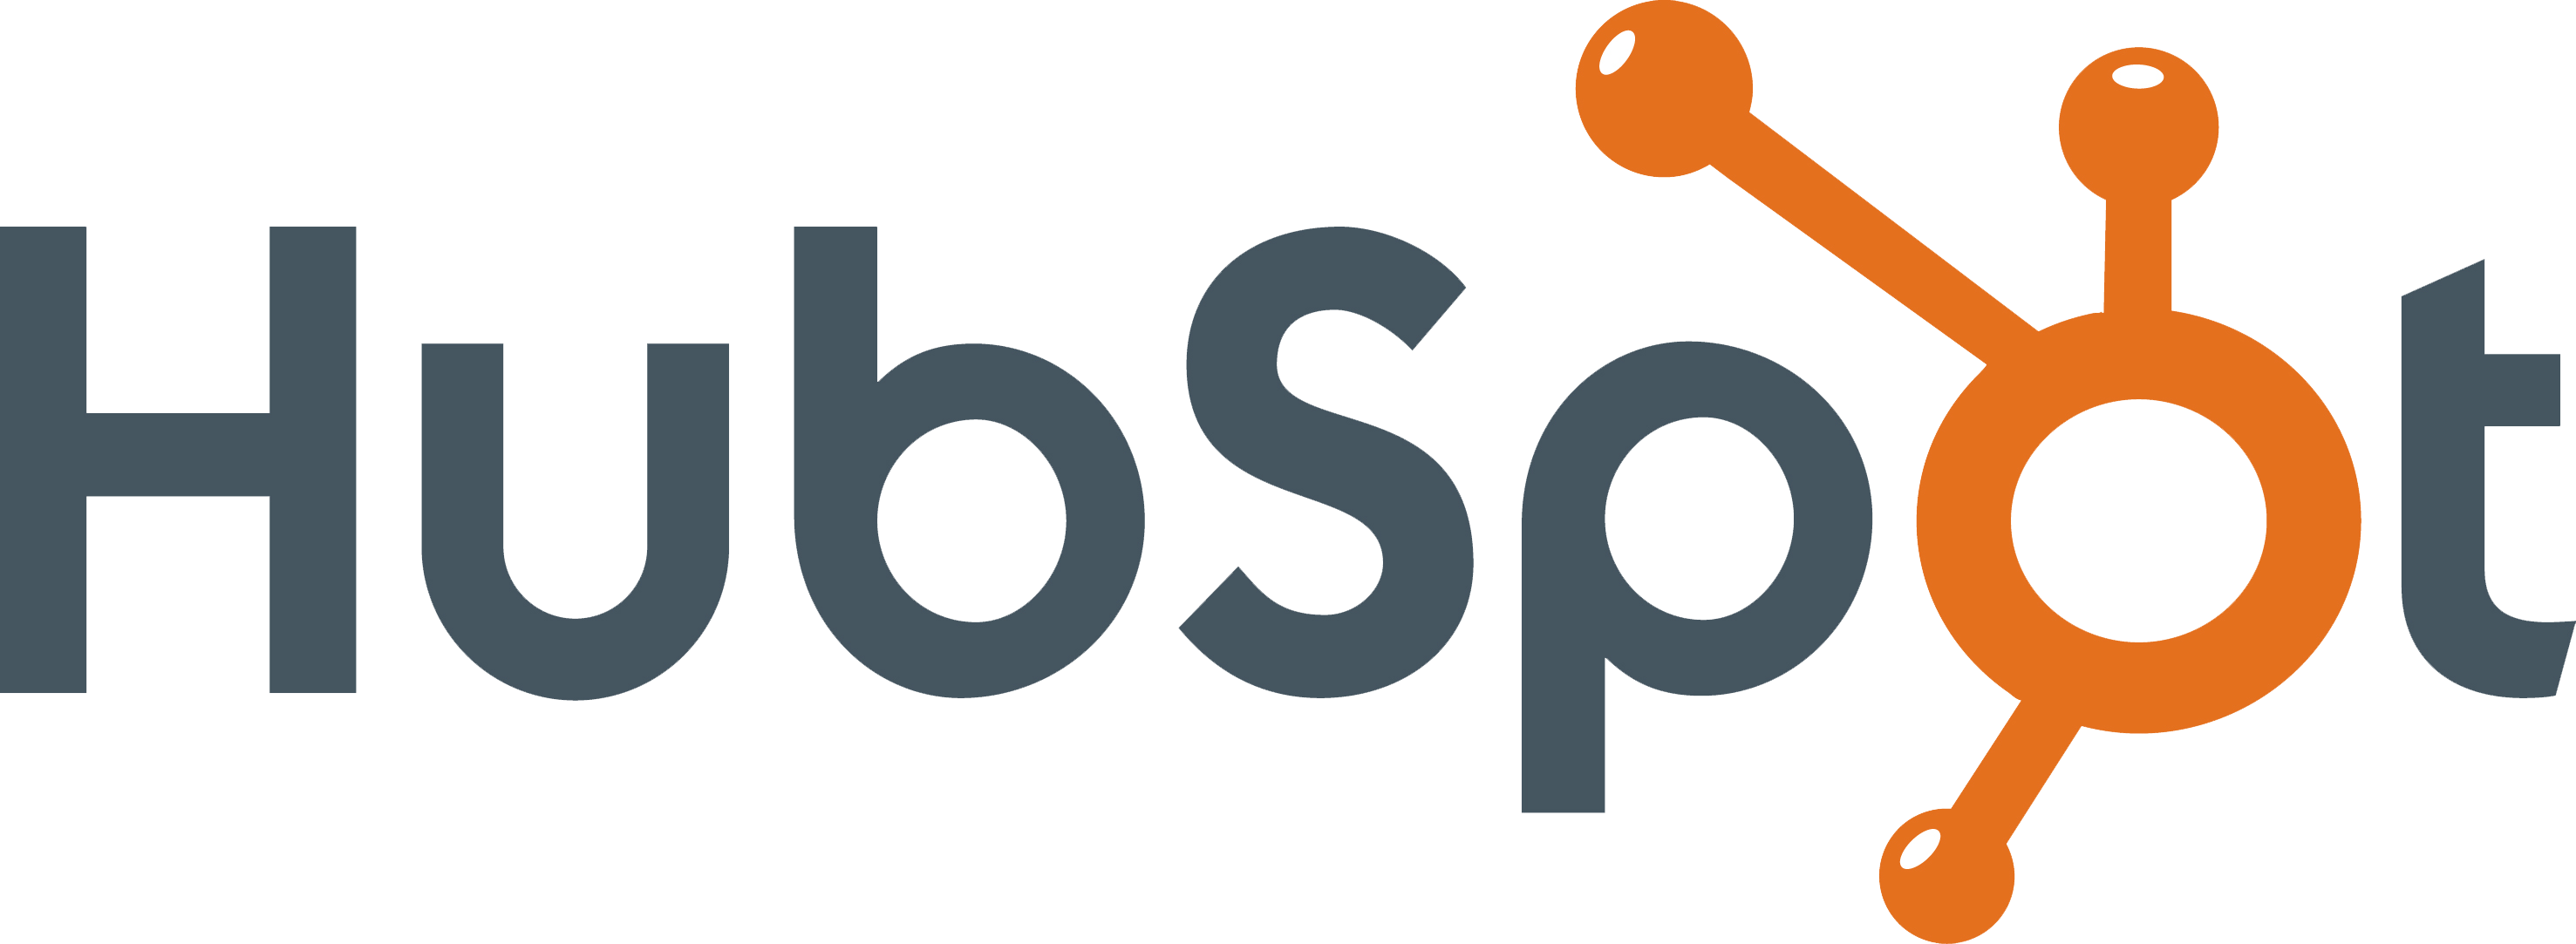 HubSpot logo